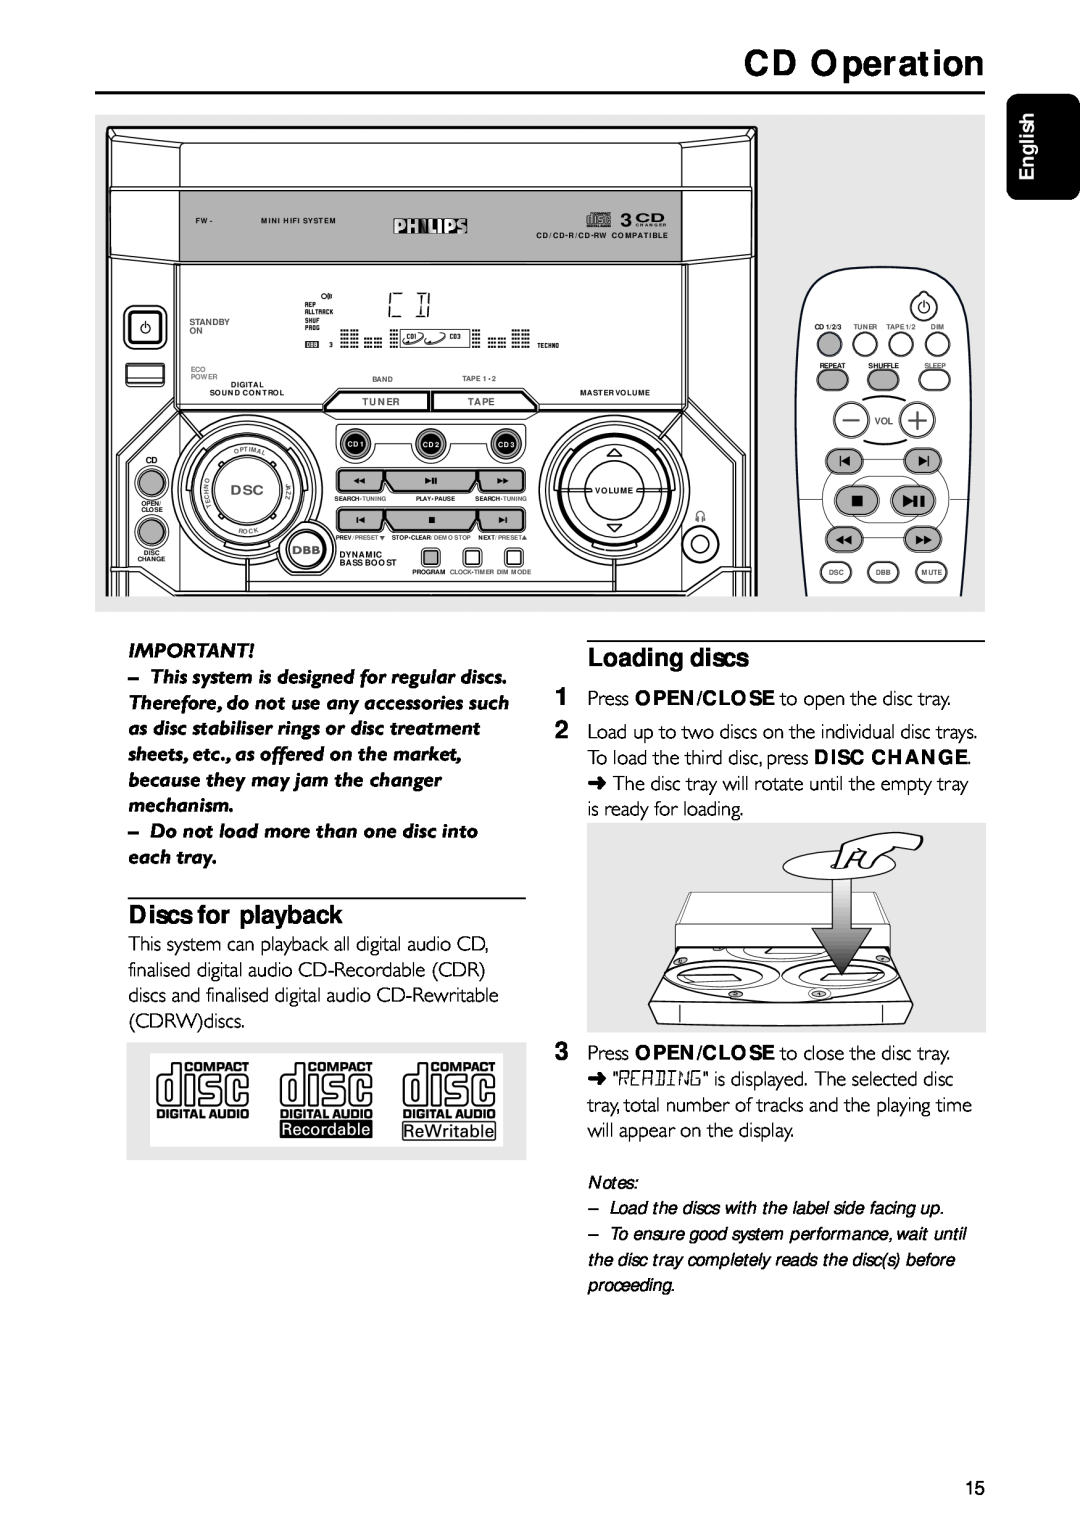 Motorola FW-C155 manual CD Operation, Discs for playback, Loading discs, English, Tuner, Tape, Power, Mute 